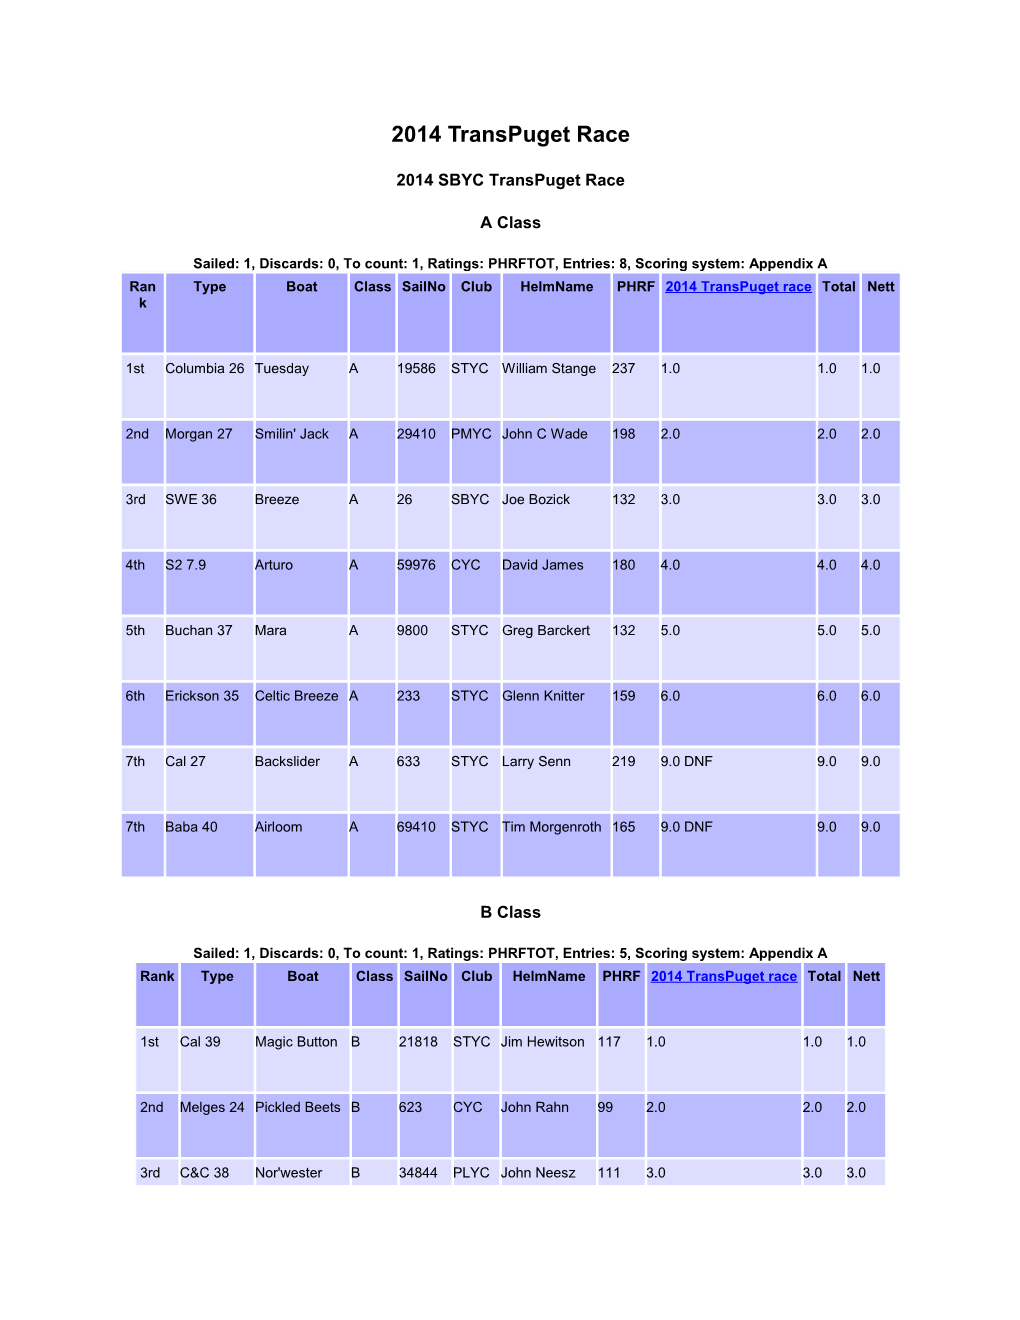 Sailwave Results for 2014 Transpuget Race at 2014